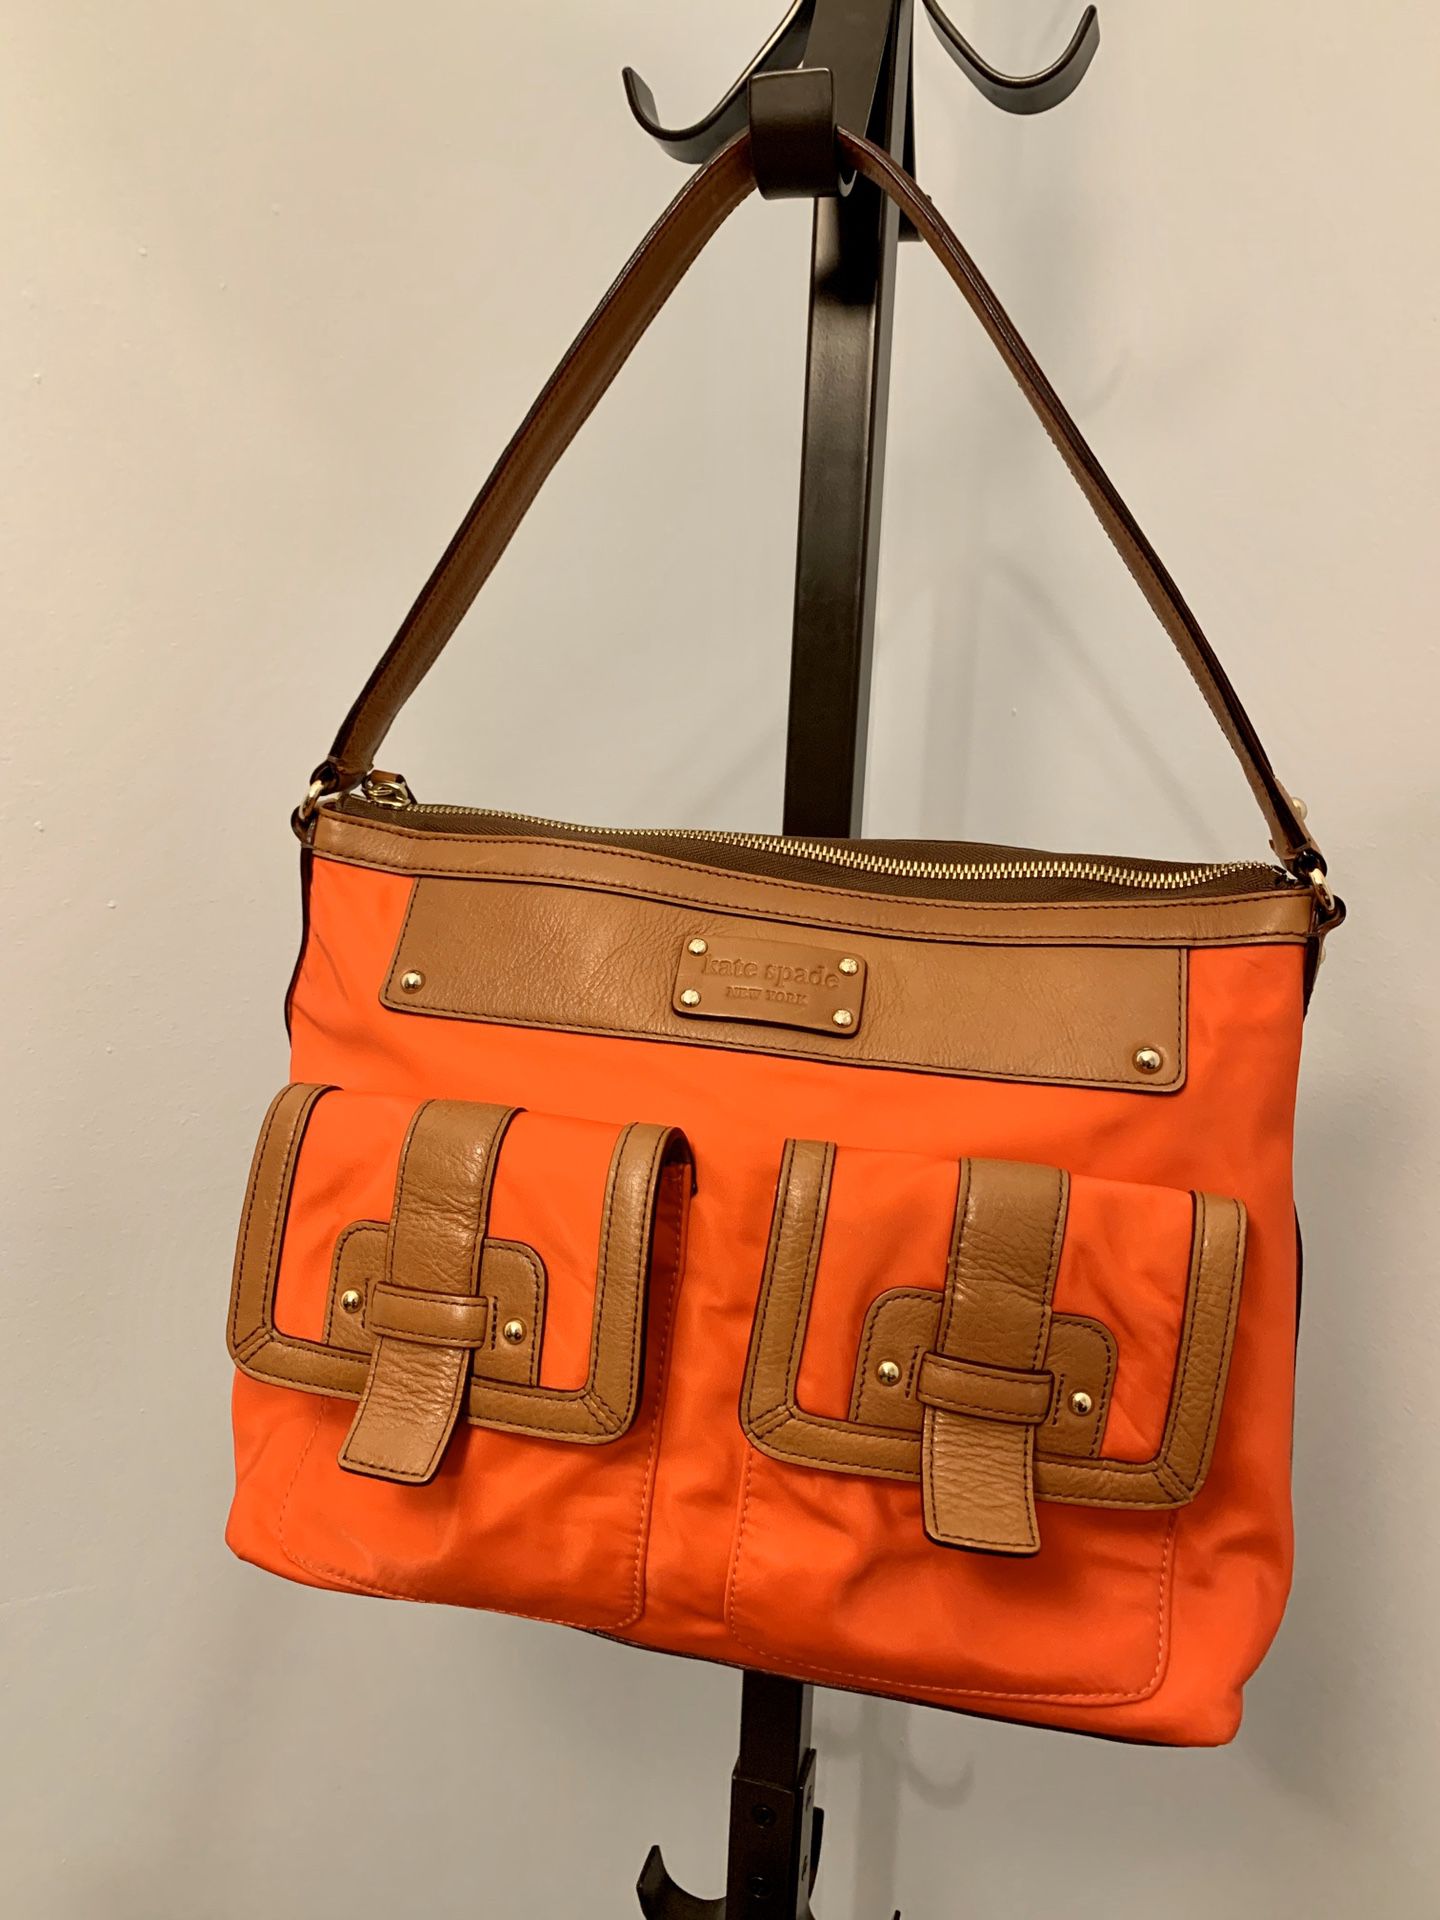 Kate Spade Orange and Brown Leather Bag